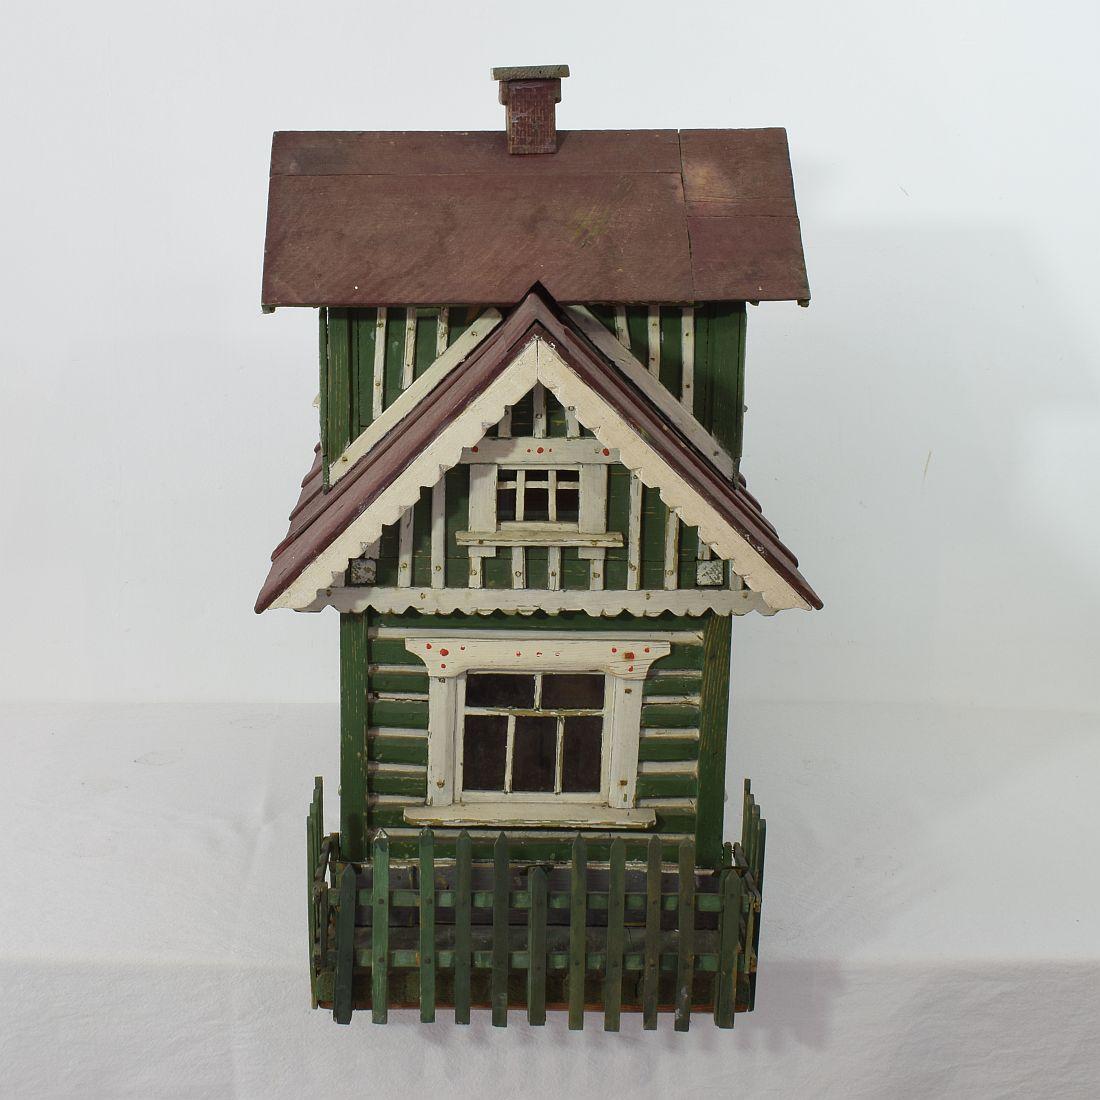 Wood Early 20th Century Folk Art Middle European Model of a House